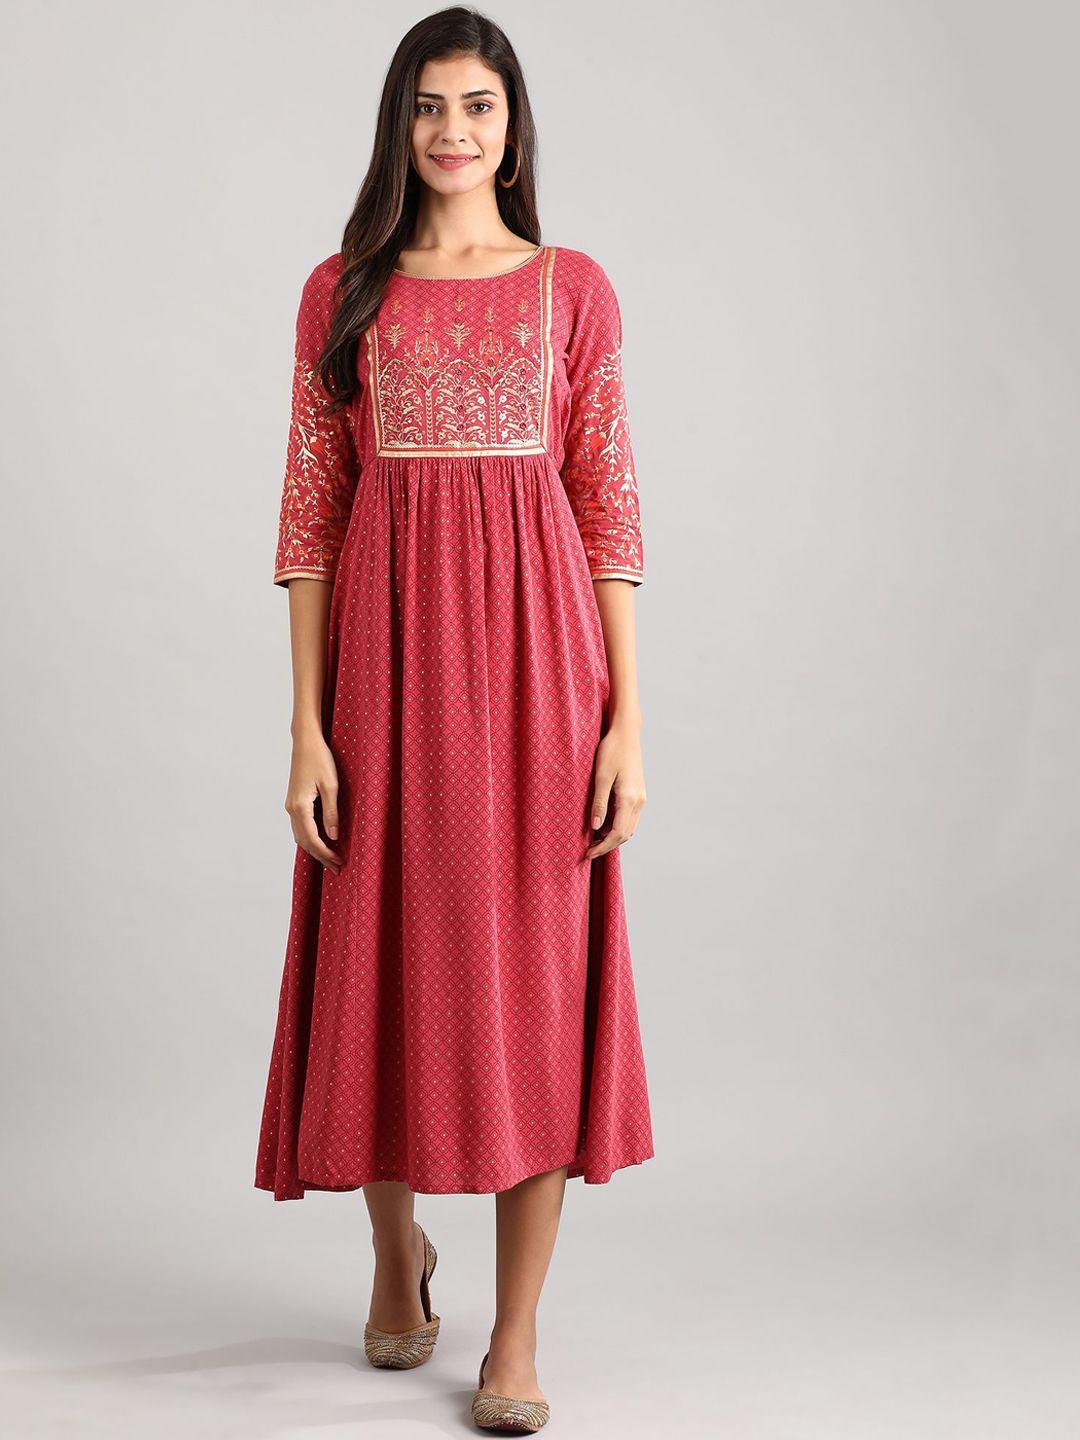 aurelia women pink embroidered a-line ethnic dress